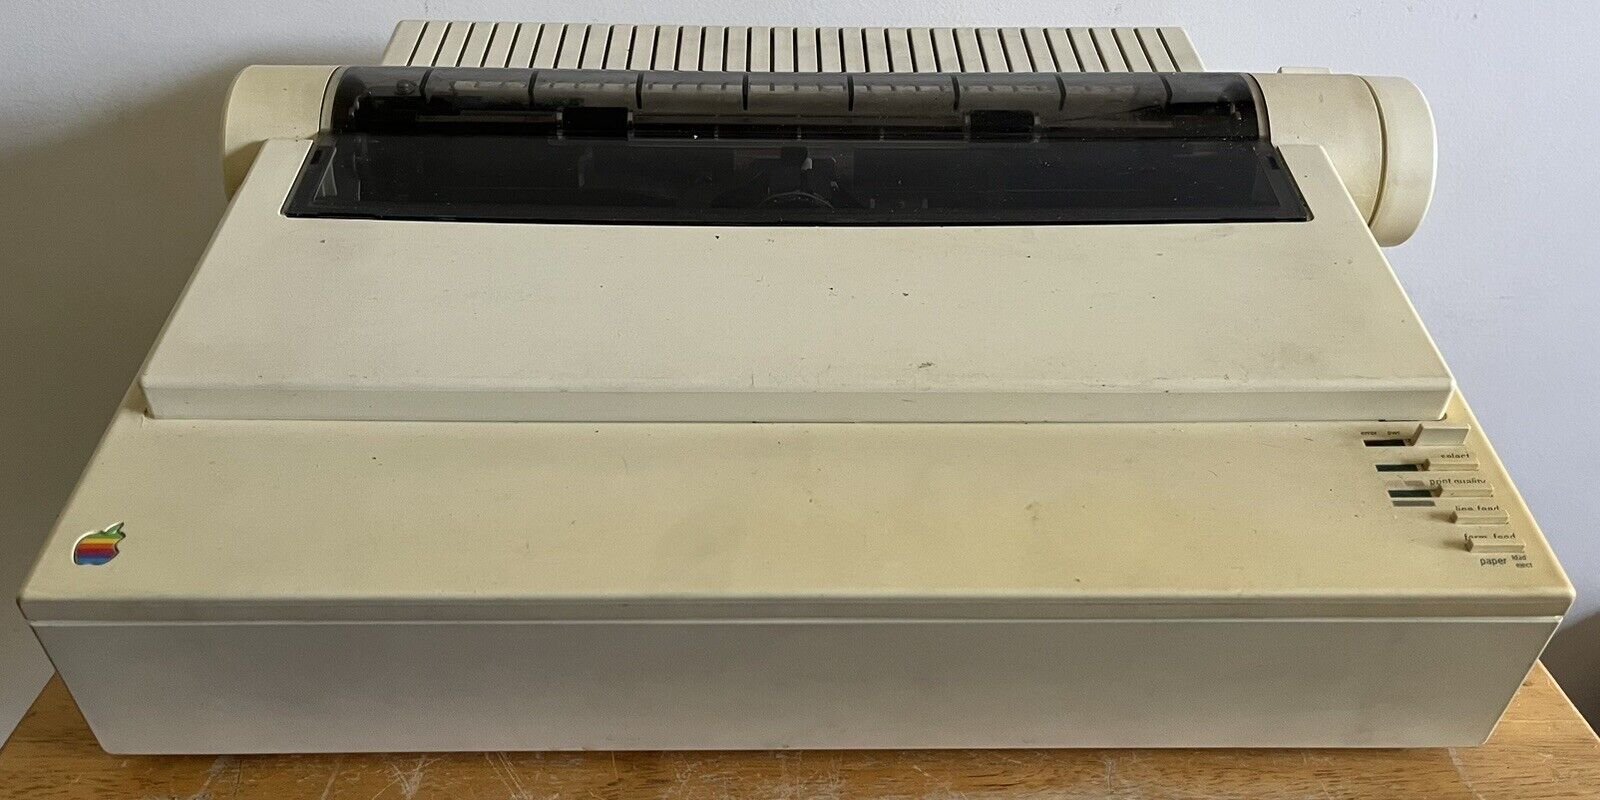 Vintage 80’s Apple ImageWriter II Printer Powers On W/ Box,Manuals -Read Details